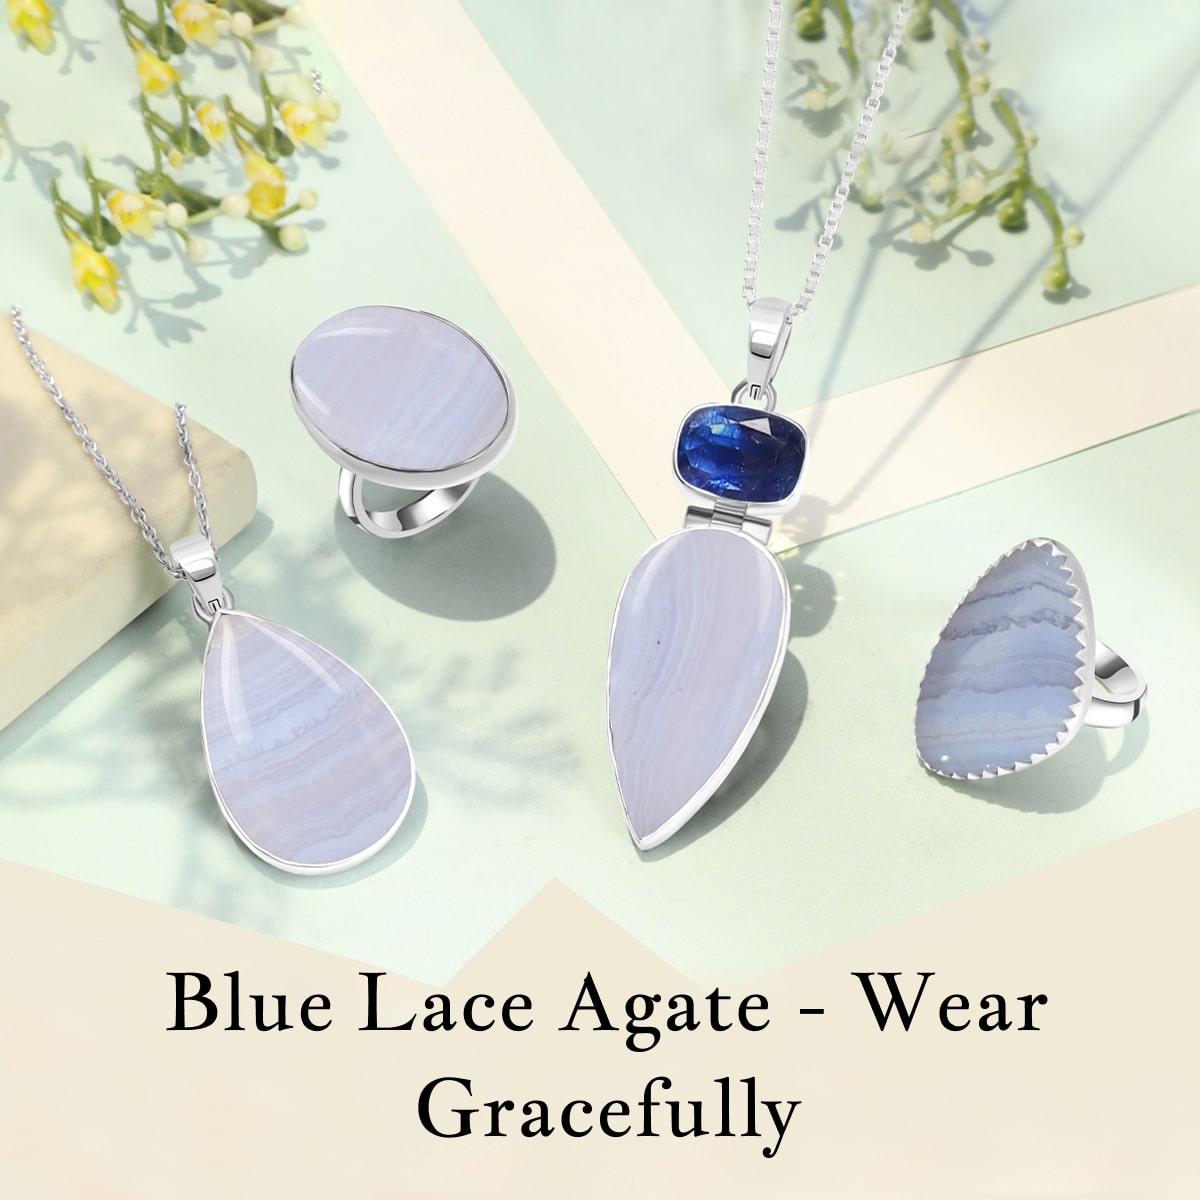 Who Should Wear Blue Lace Agate